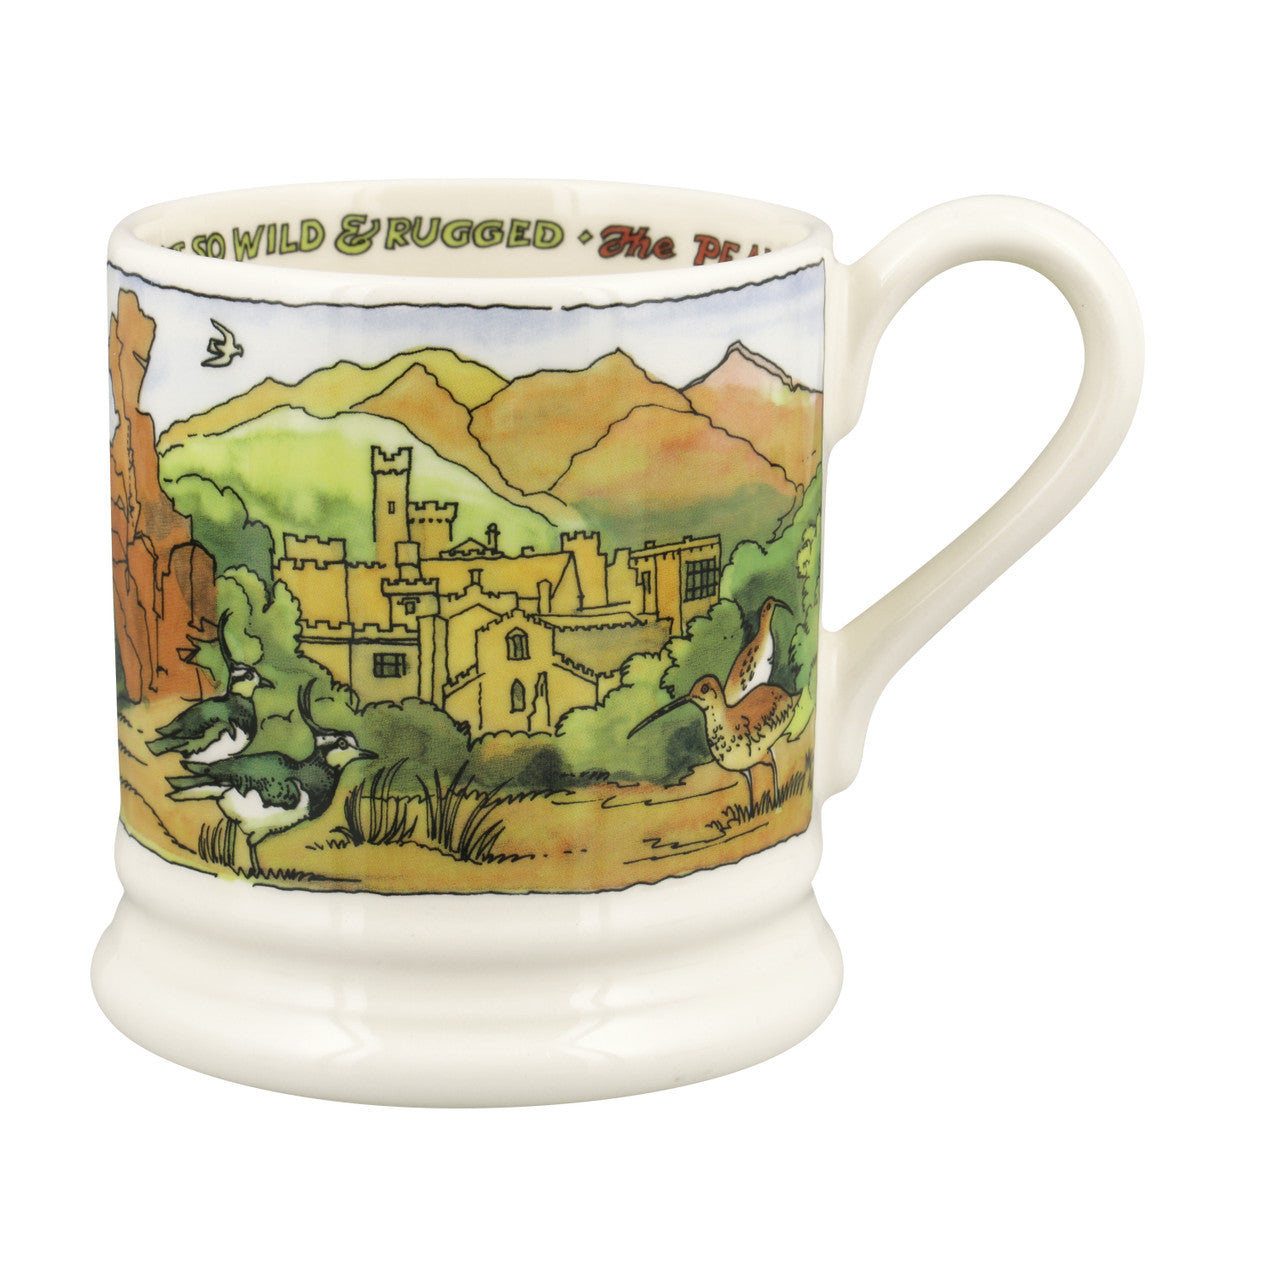 Emma Bridgewater Peak District Half Pint Mug. Made in England